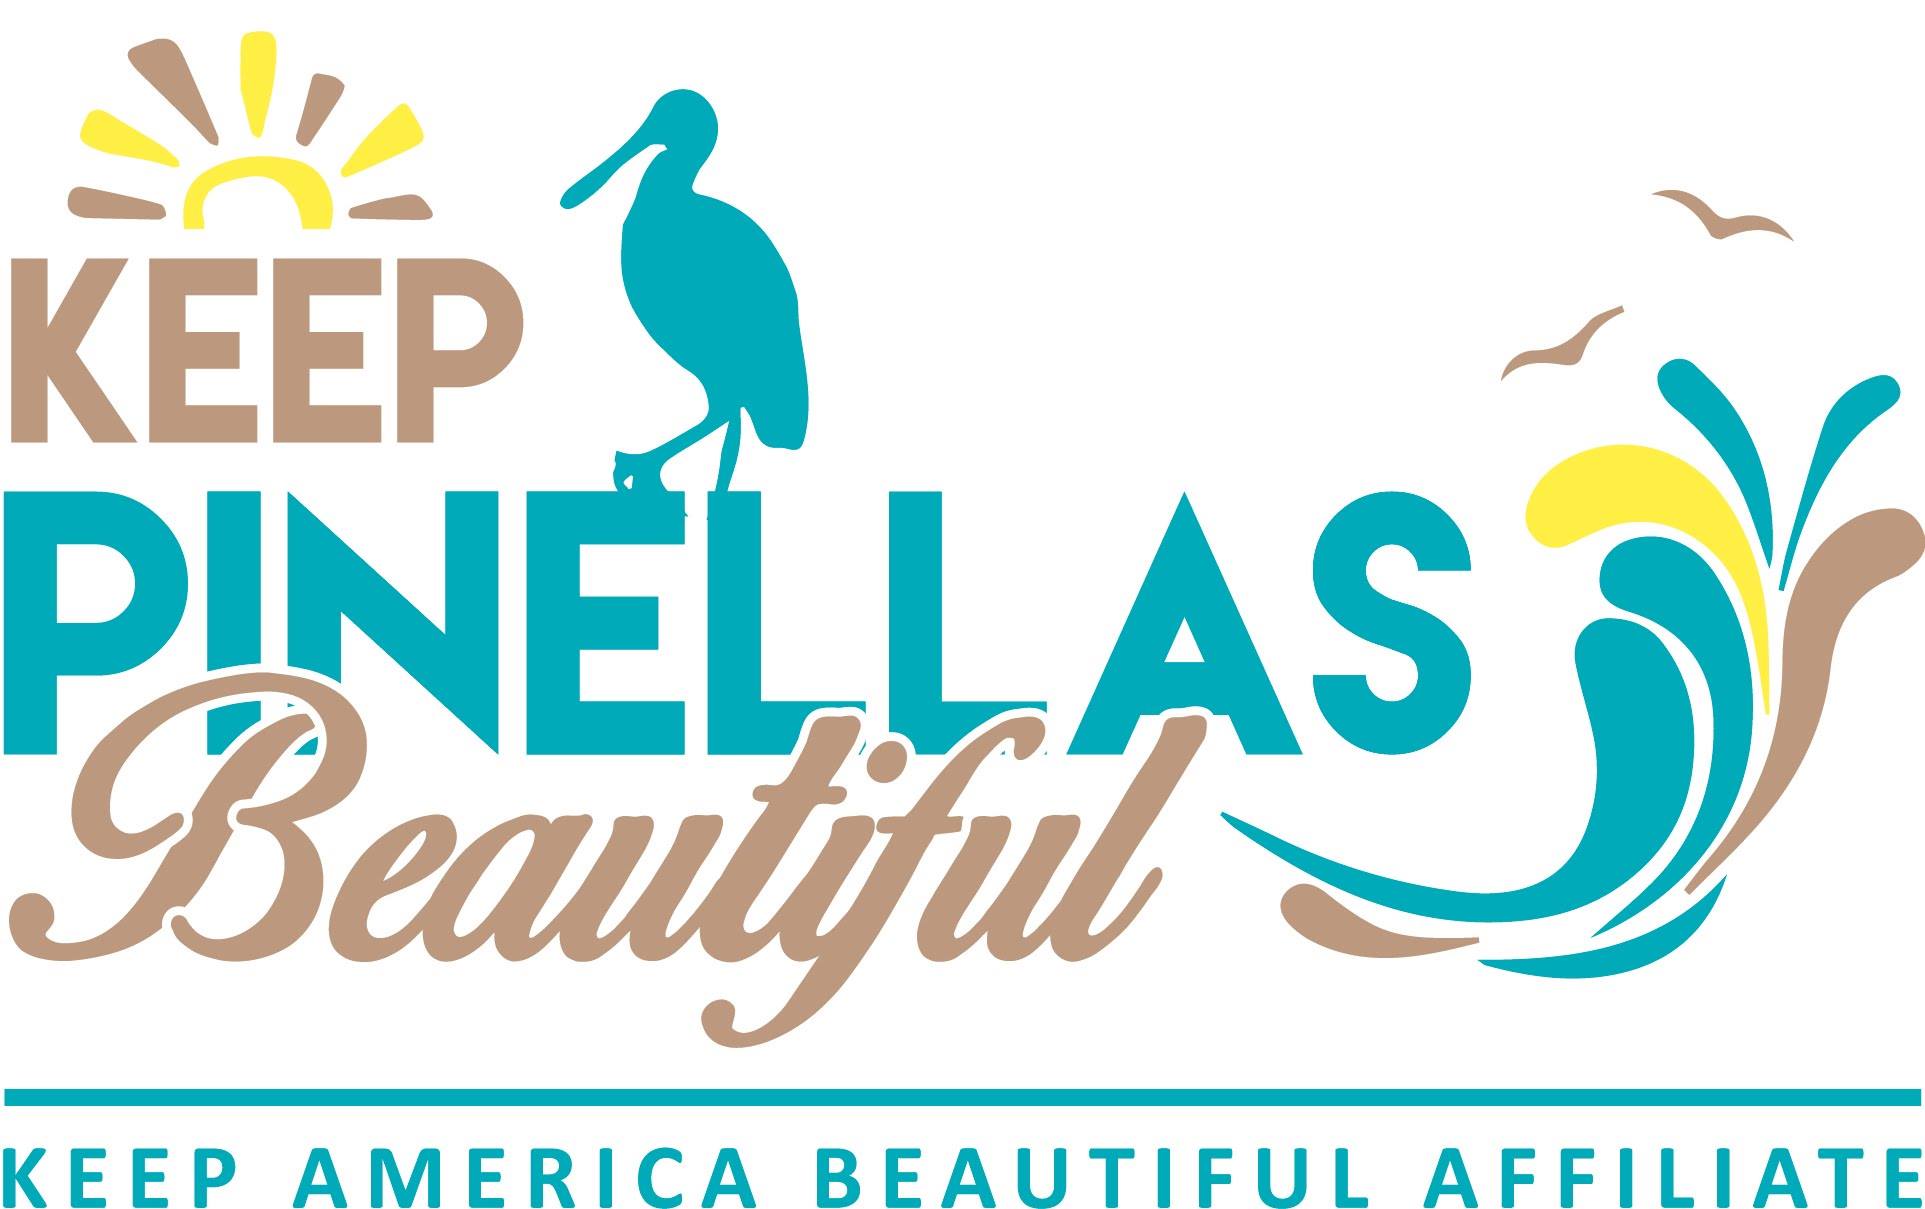 Beautiful Beach Logo - Keep Pinellas Beautiful: Beach Clean up Day | Mad Beach Events ...